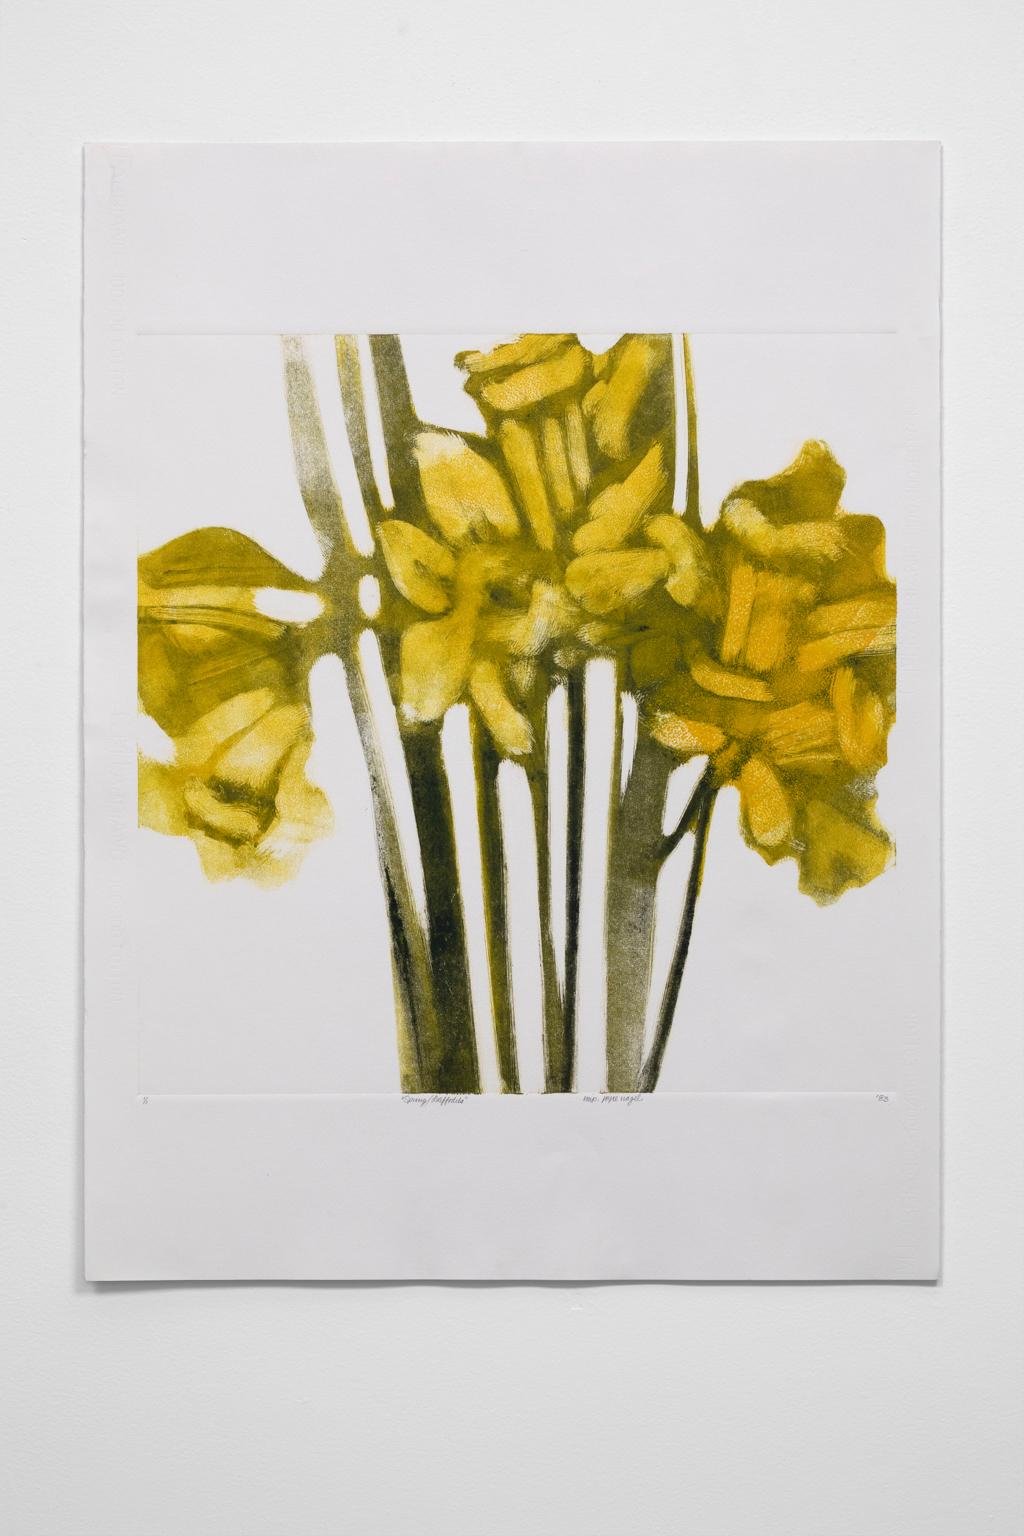 Joyce T. Nagel Monoprint "Spring/Daffodils" Signed Dated